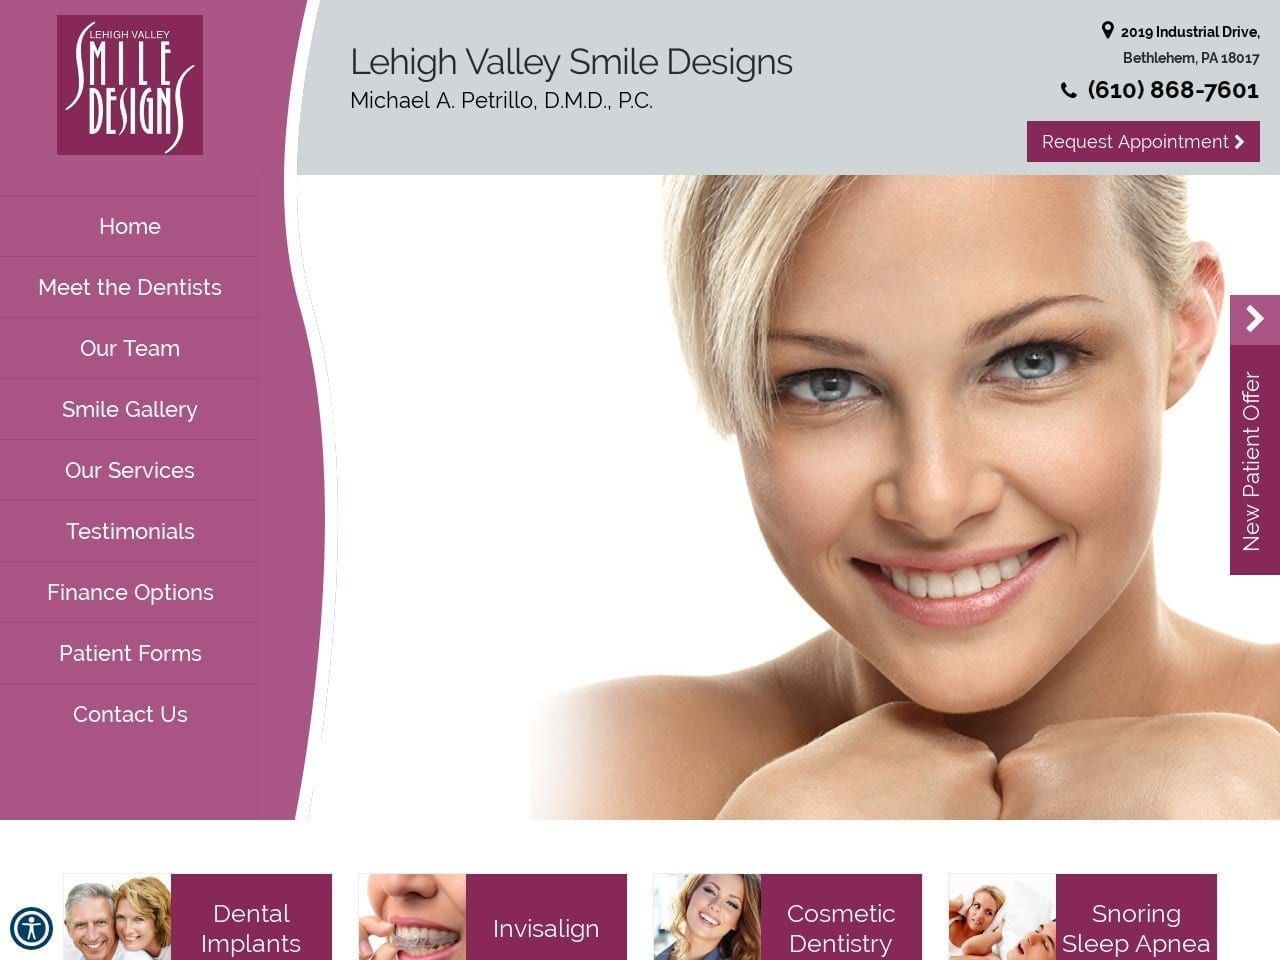 Lehigh Valley Smile Designs Website Screenshot from drpetrillo.com